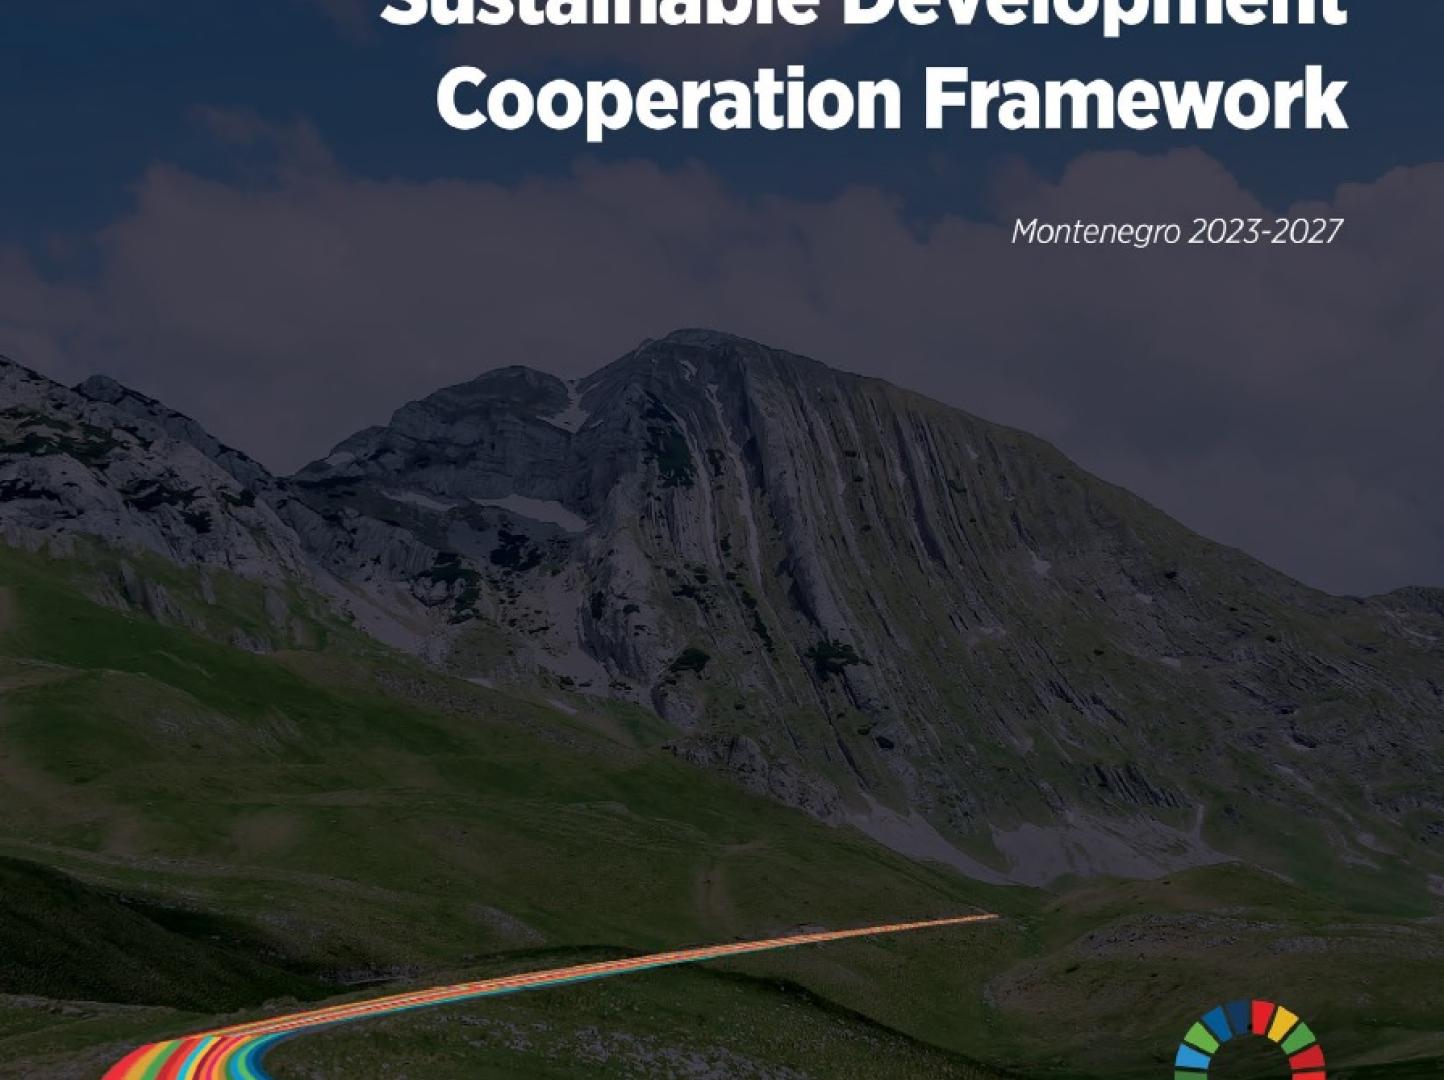 United Nations Sustainable Development Cooperation Framework